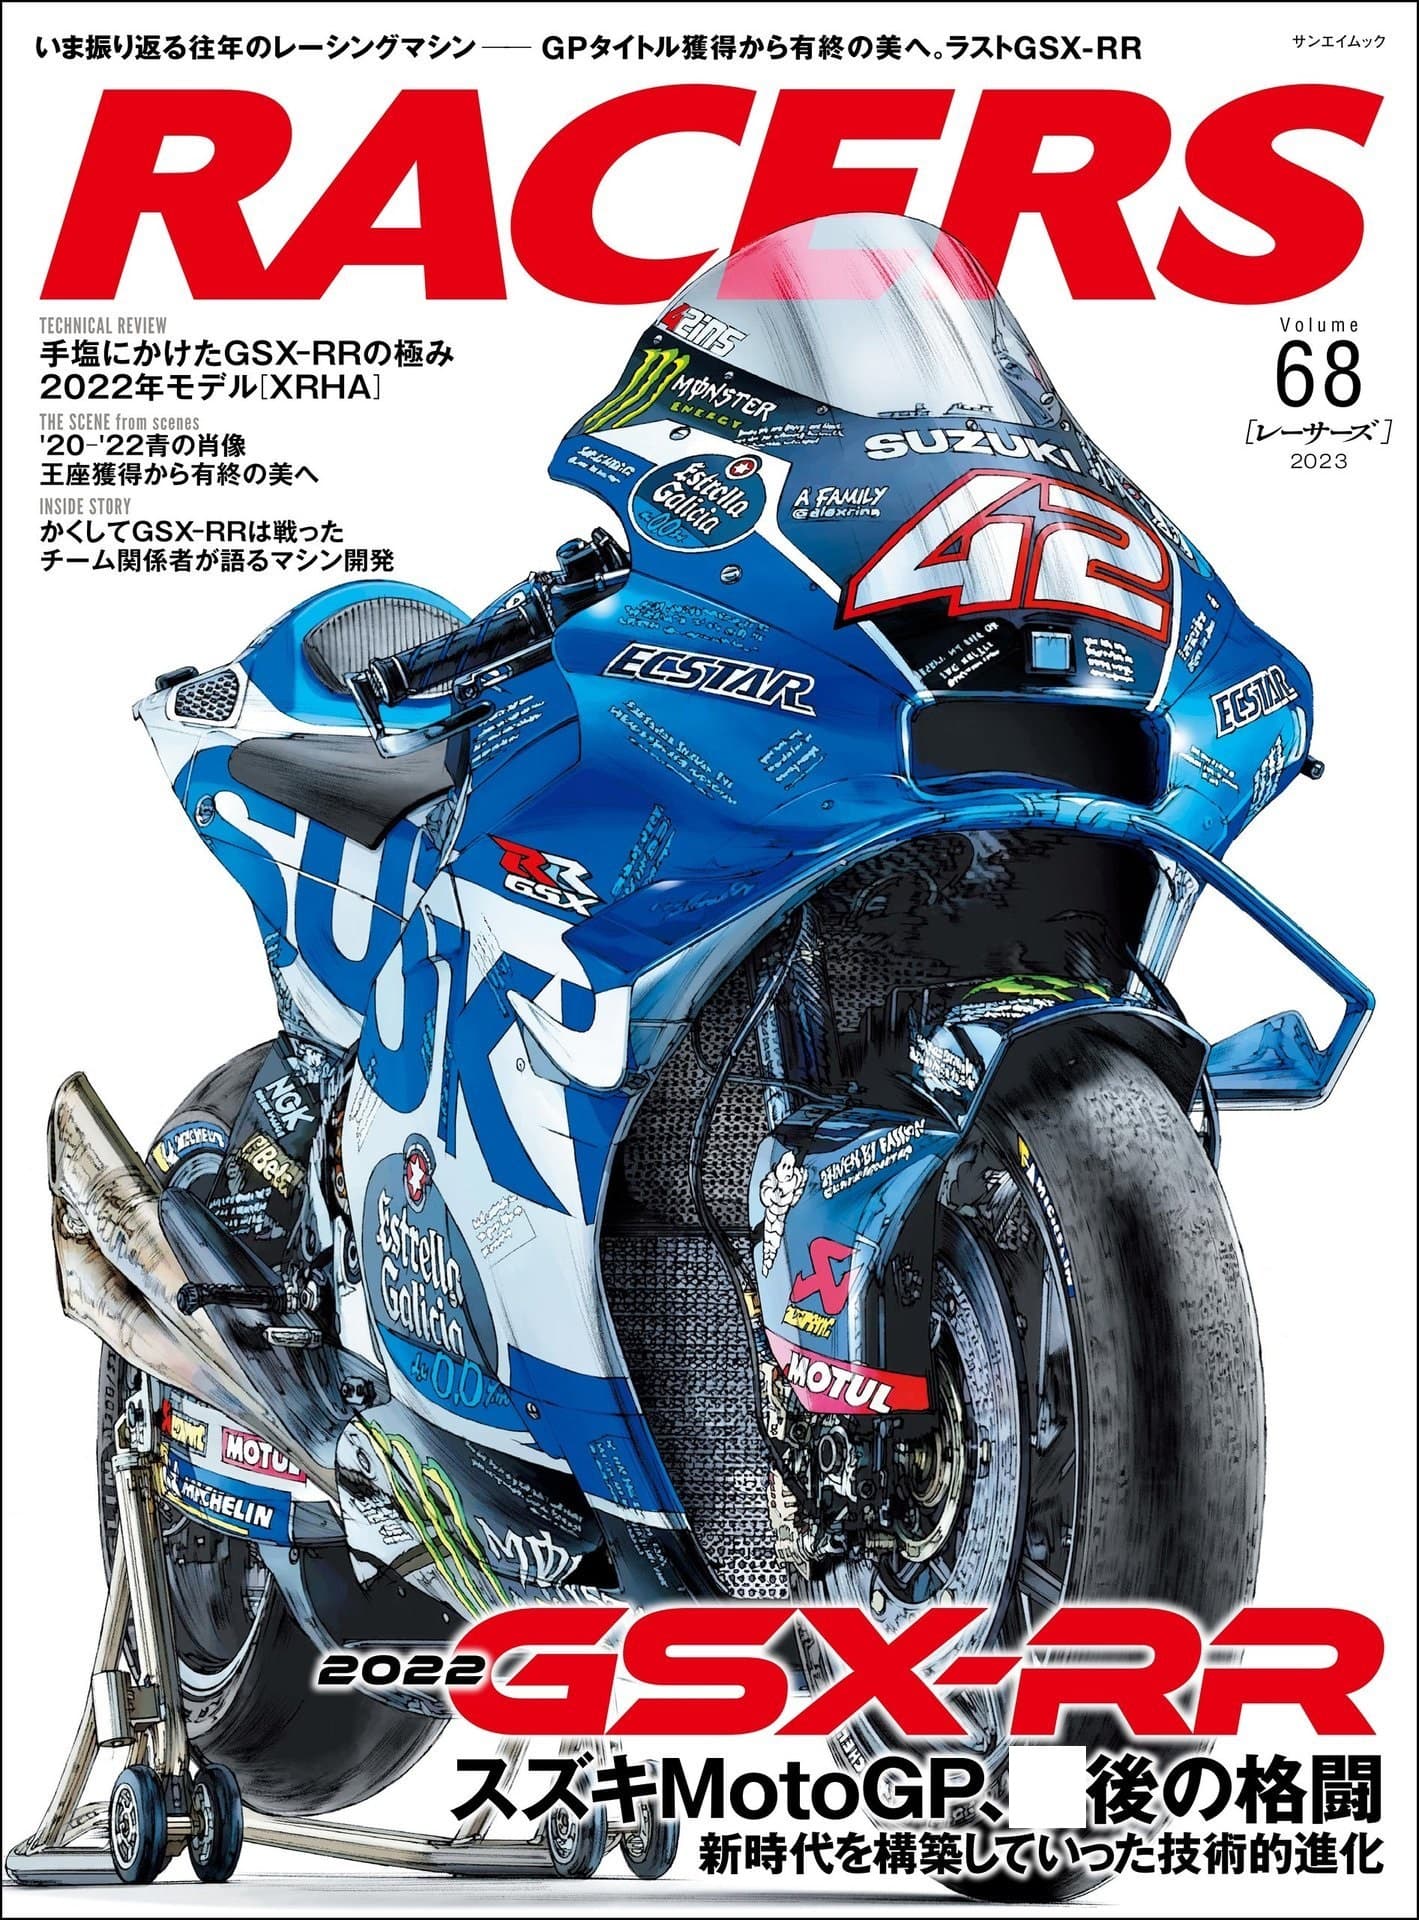 Racers Vol.68 铃木GSX-RR Moto GP赛车